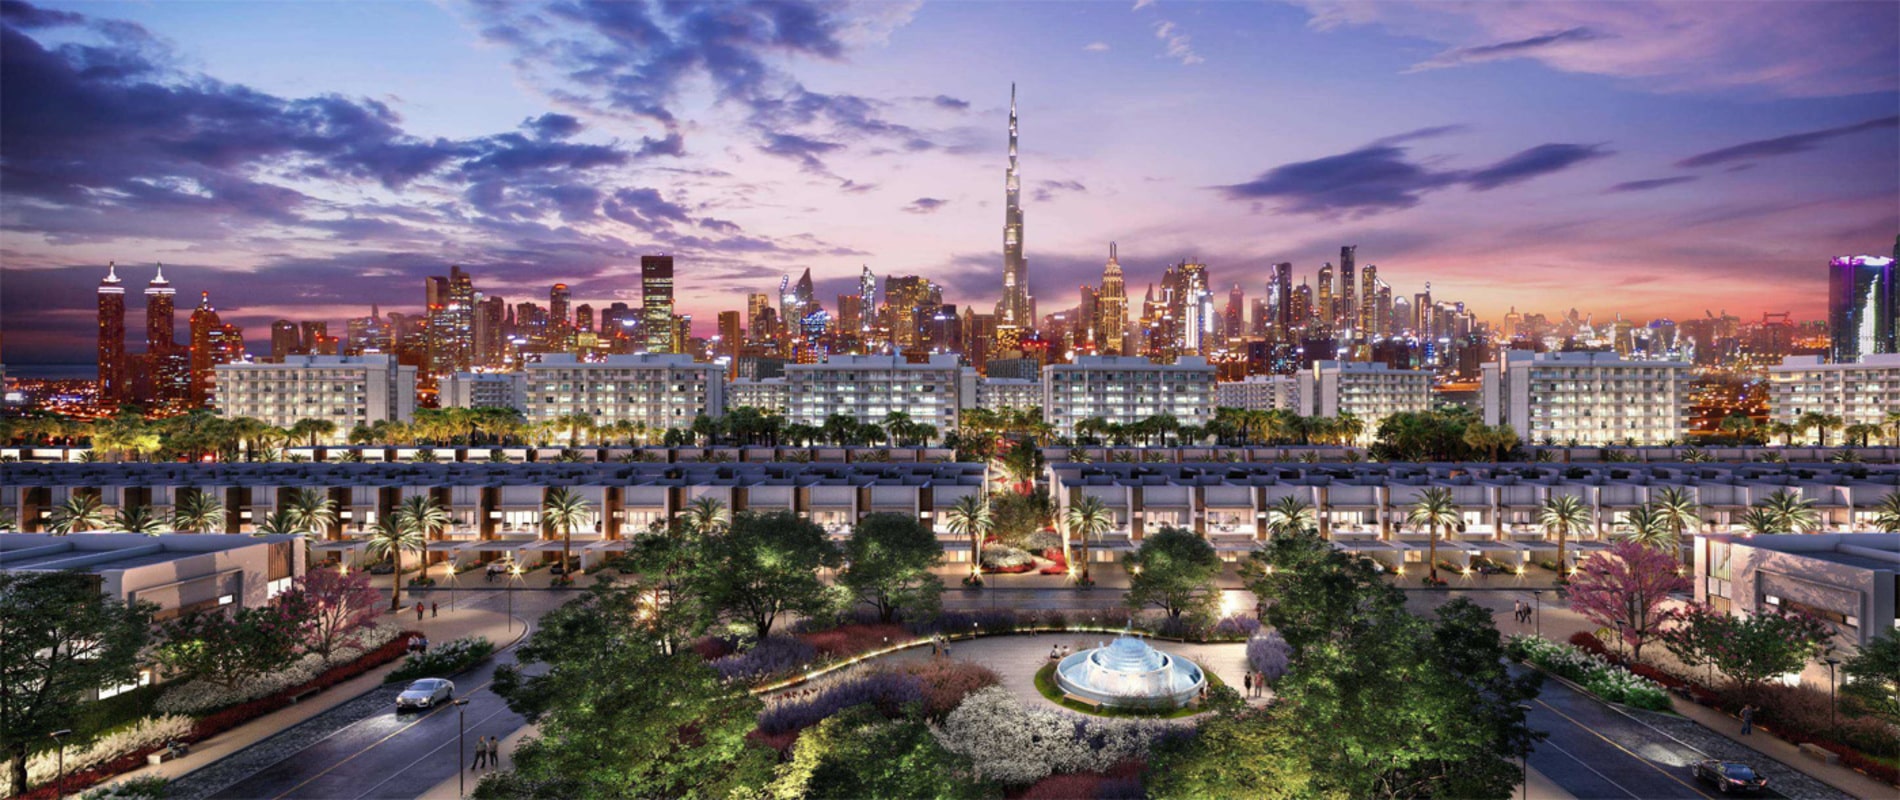 MAG City Park Townhouses - MBR City Dubai.